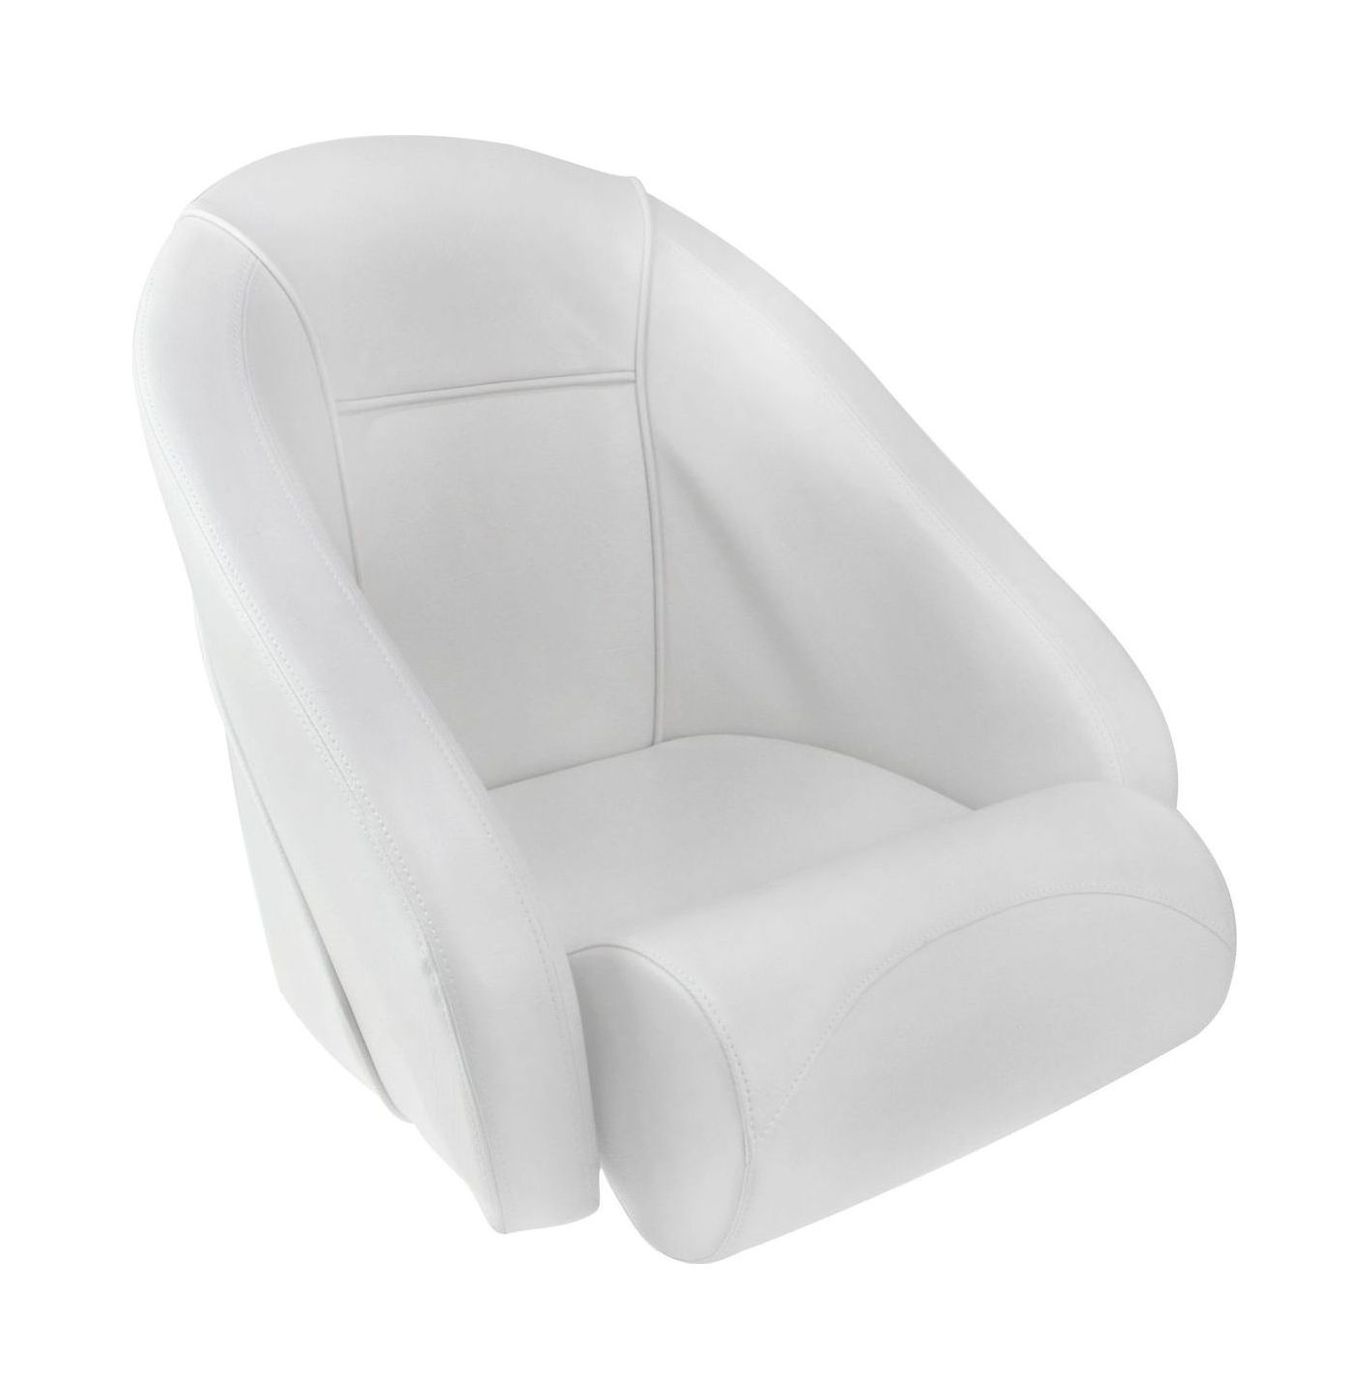 Кресло ROMEO мягкое, подставка, обивка белый винил, Springfield, 00017492